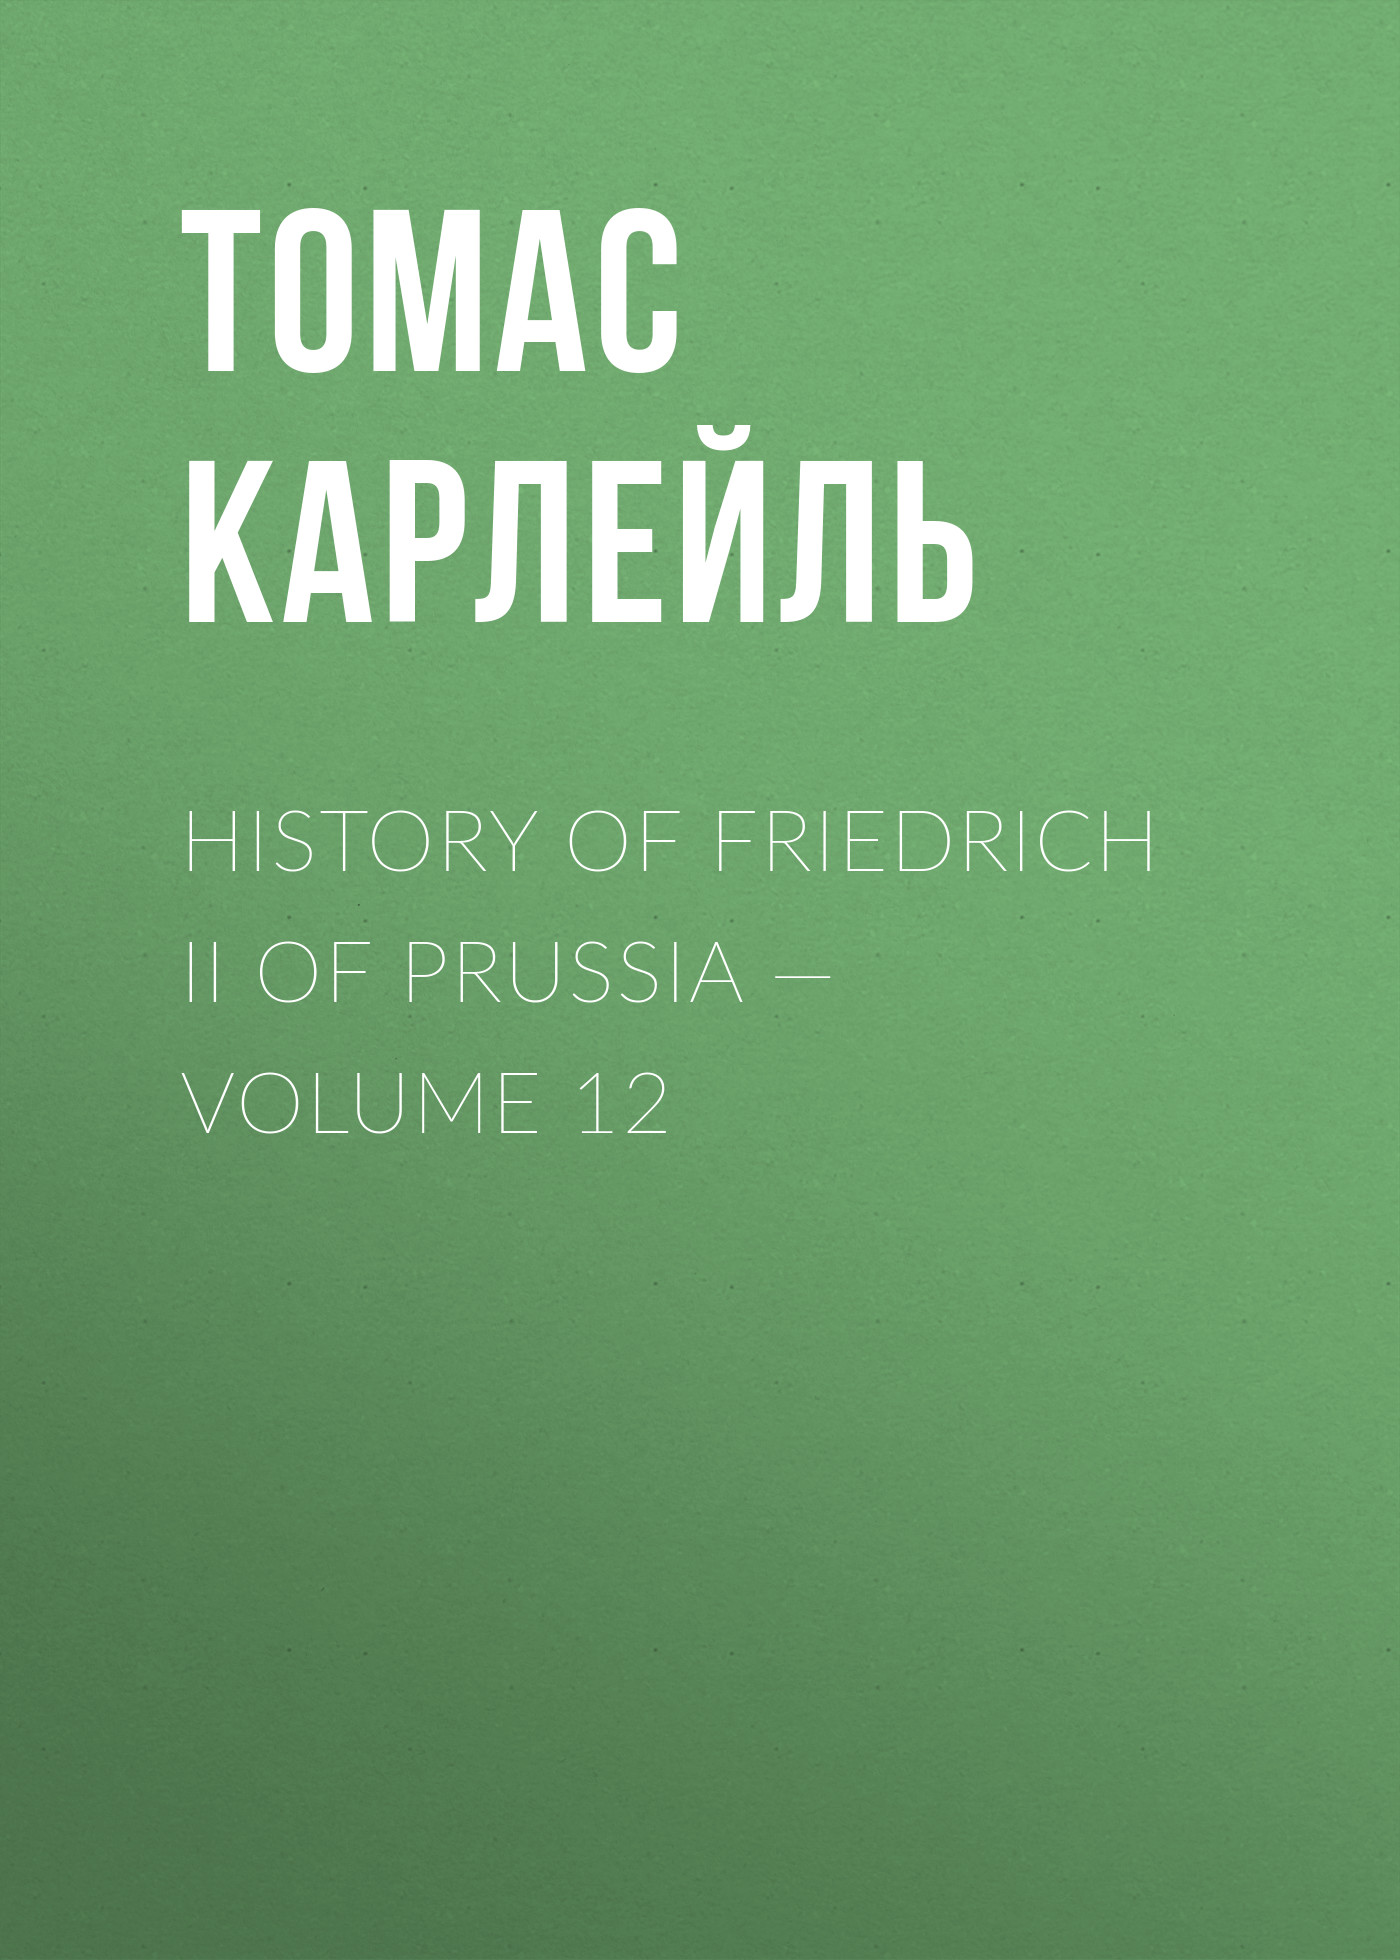 History of Friedrich II of Prussia— Volume 12